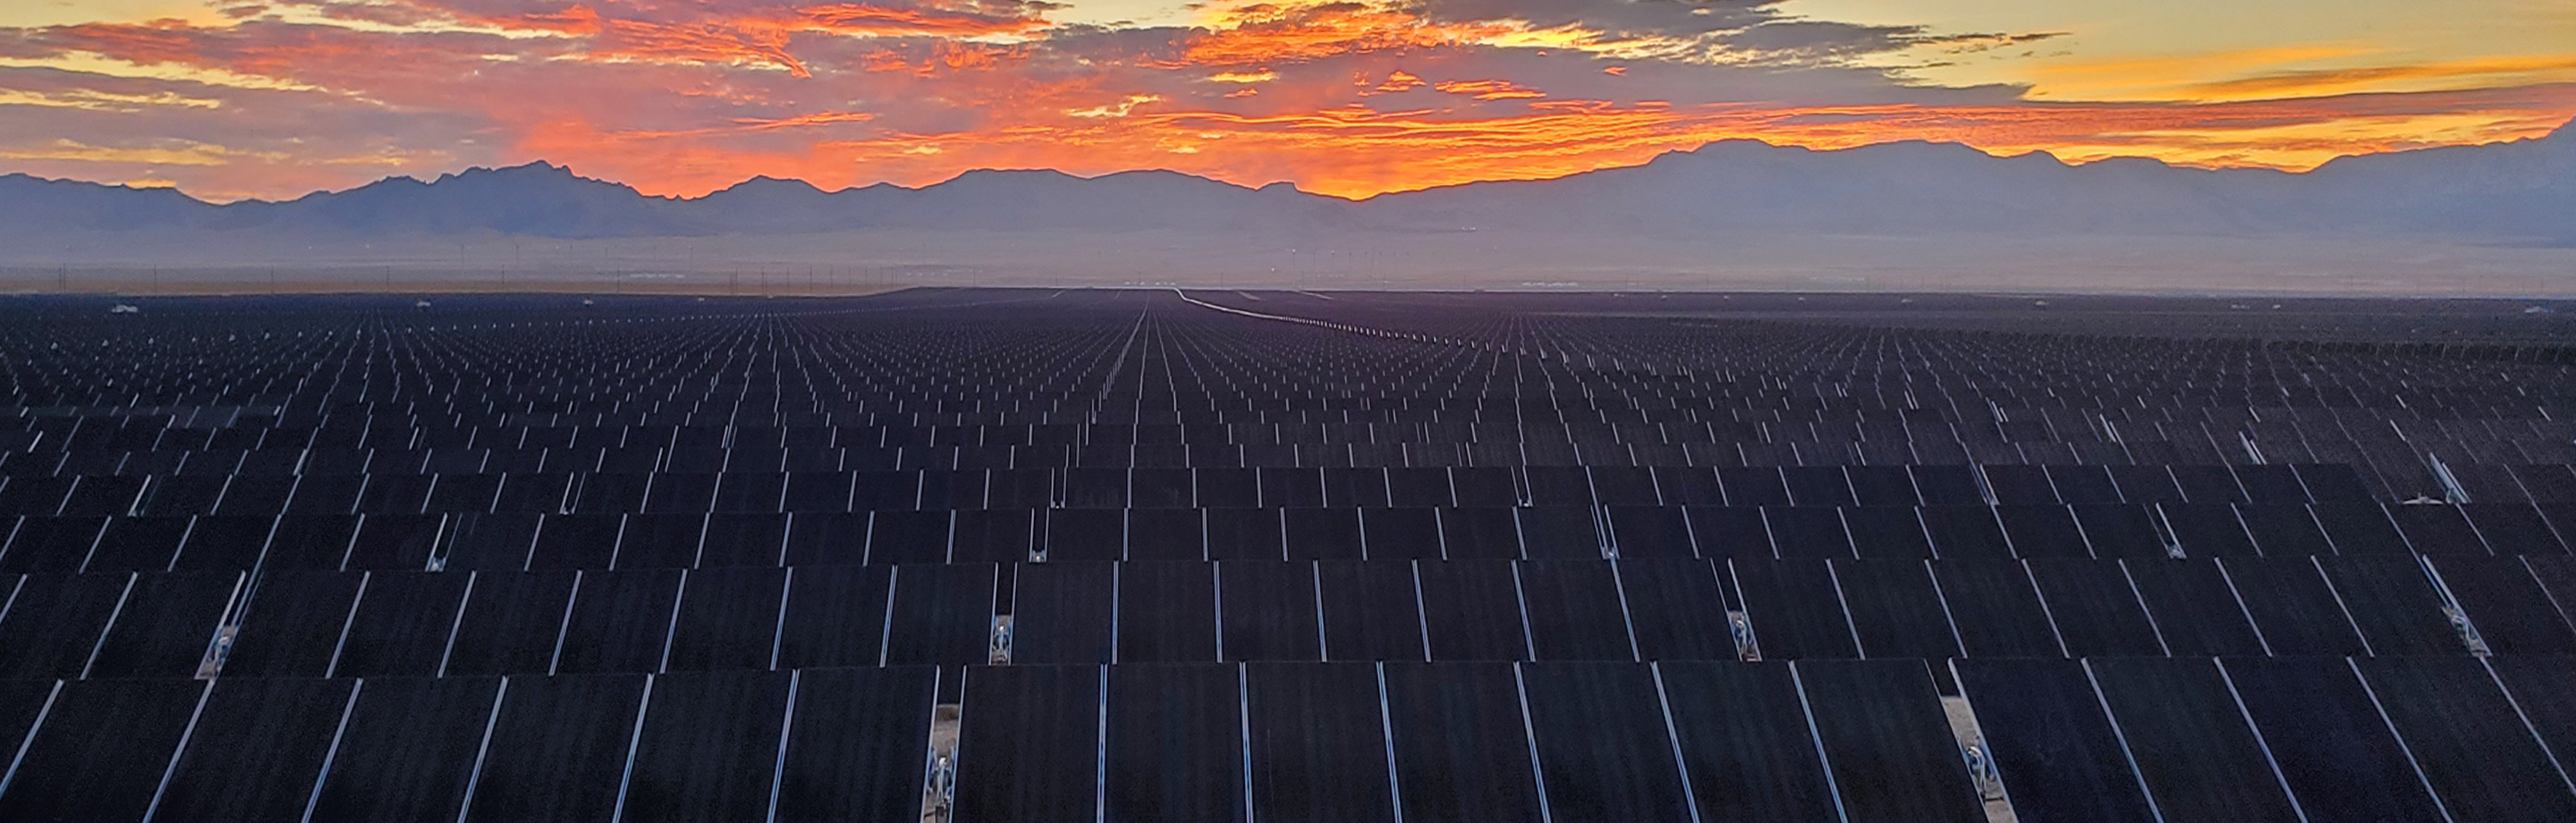 solar panel farm image